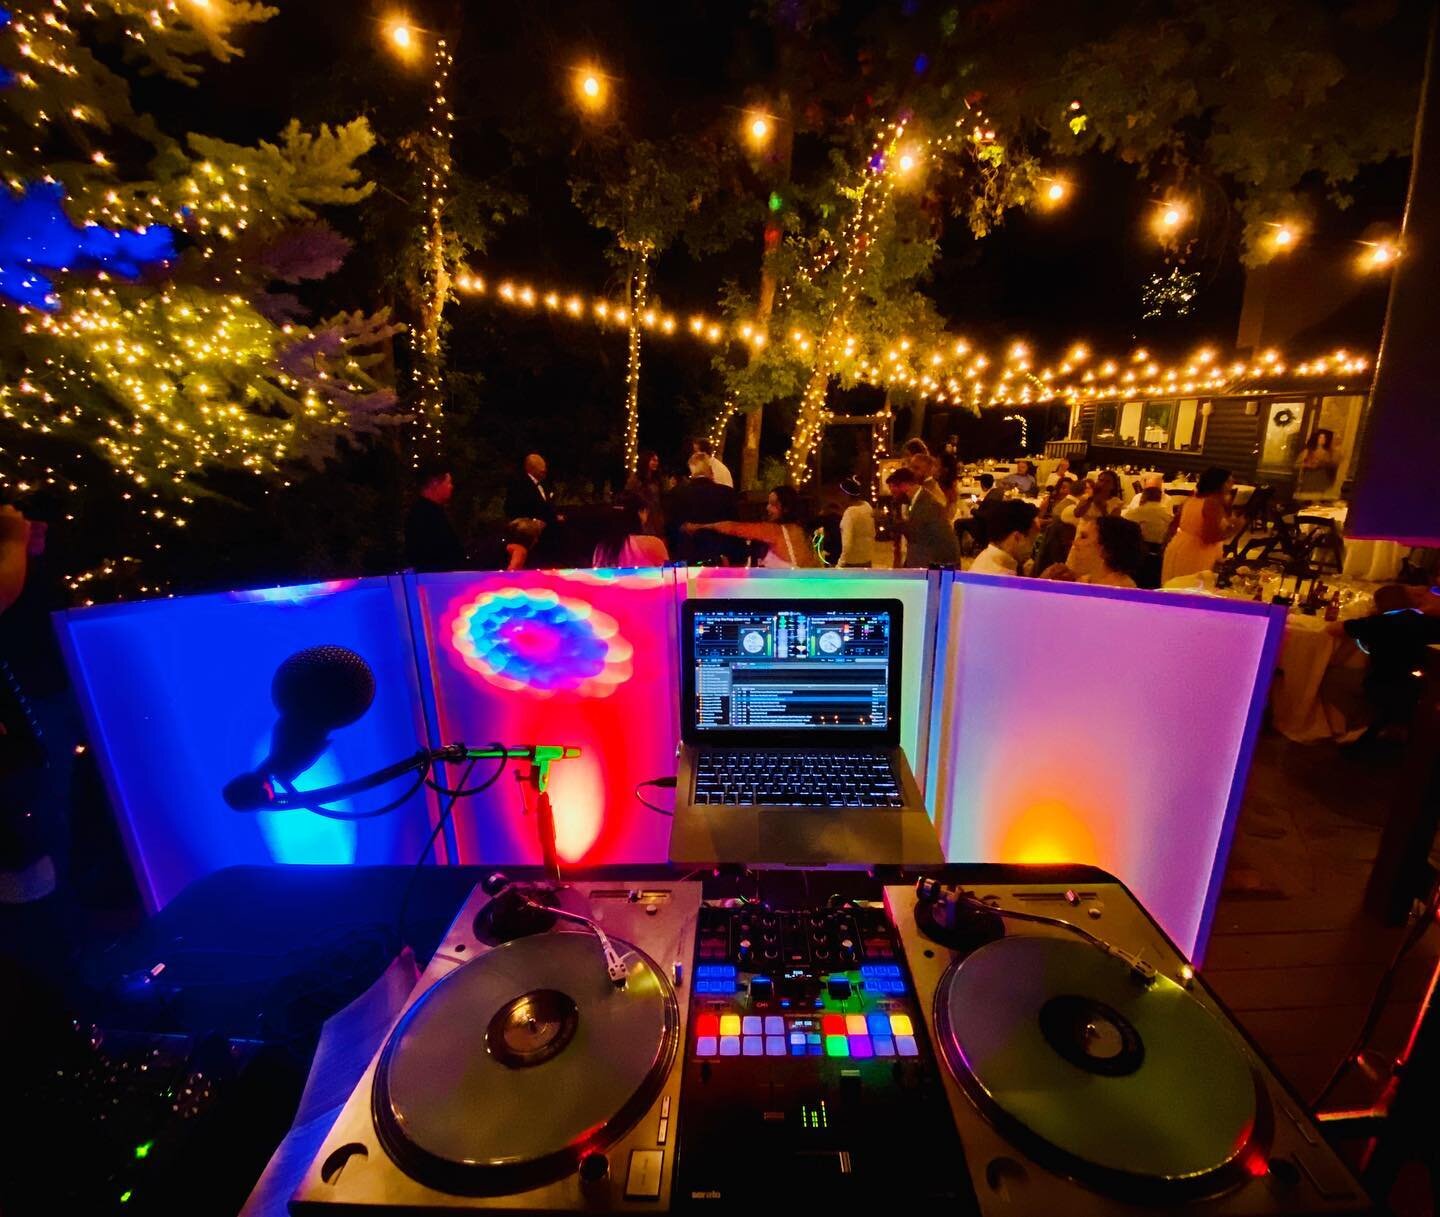 Jueves Latino @ Ibiza SLC — PREMIER EVENT DJ